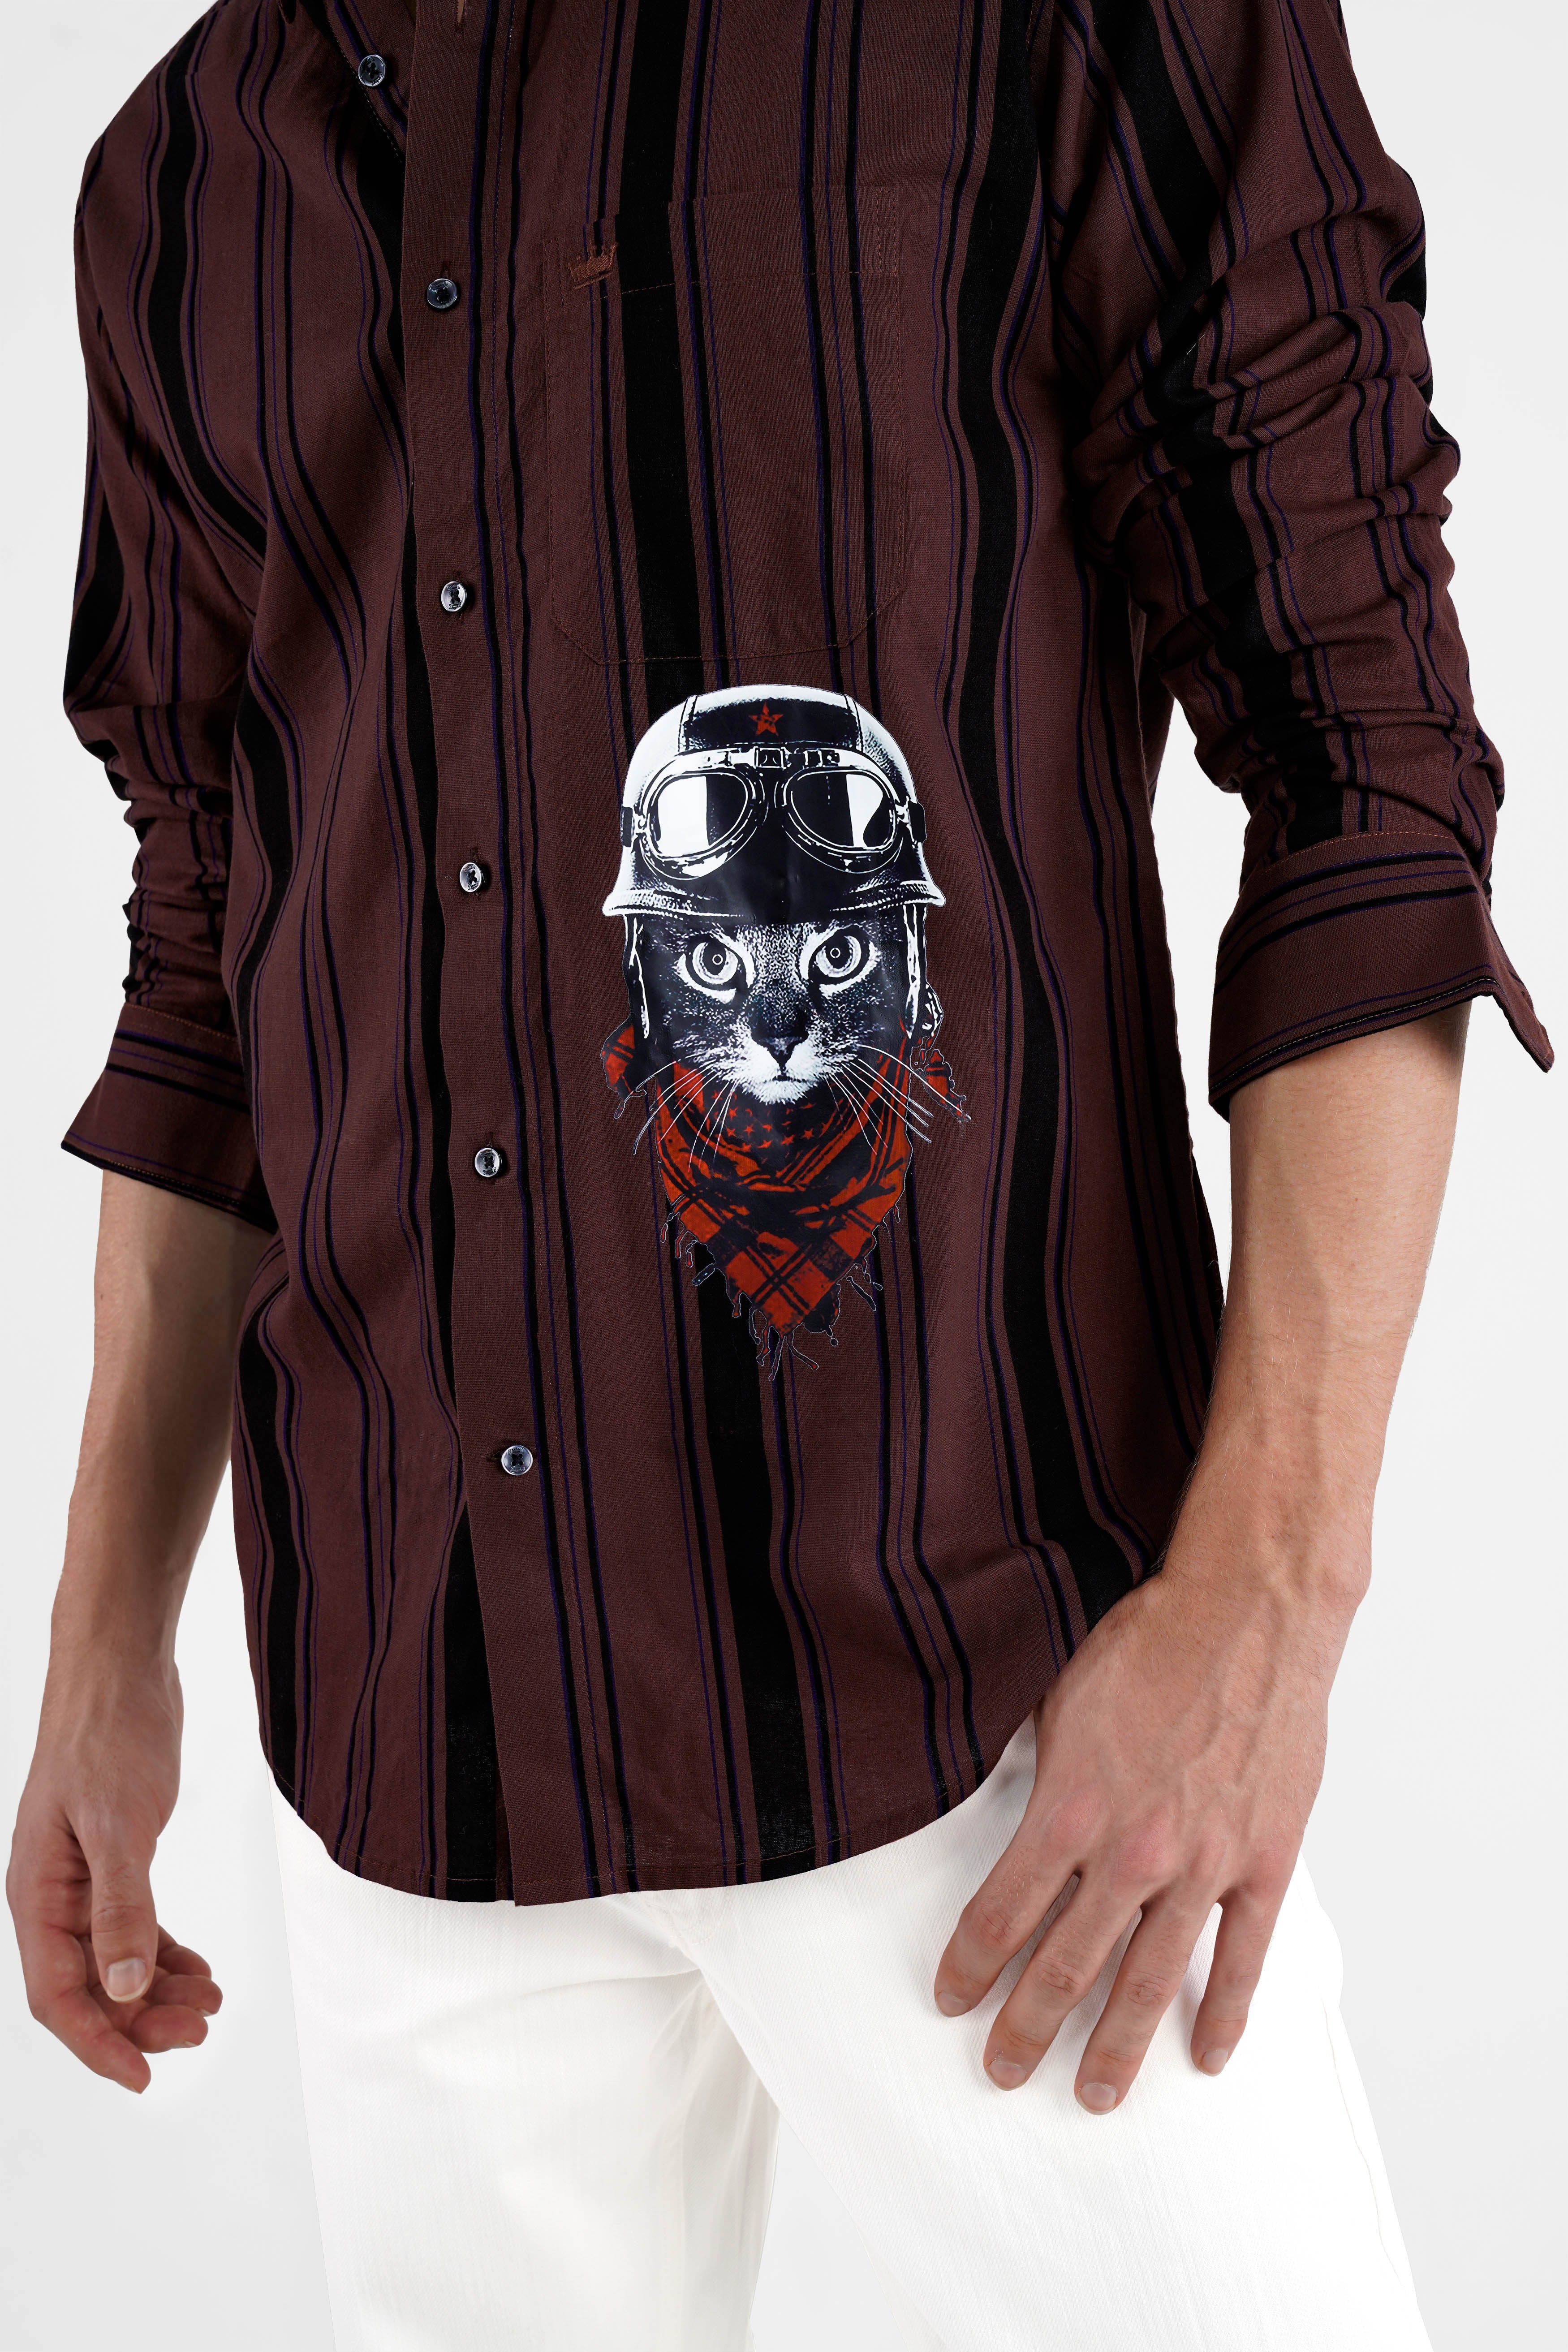 Matterhorn Brown Striped with Funky Cat Printed Royal Oxford Designer Shirt